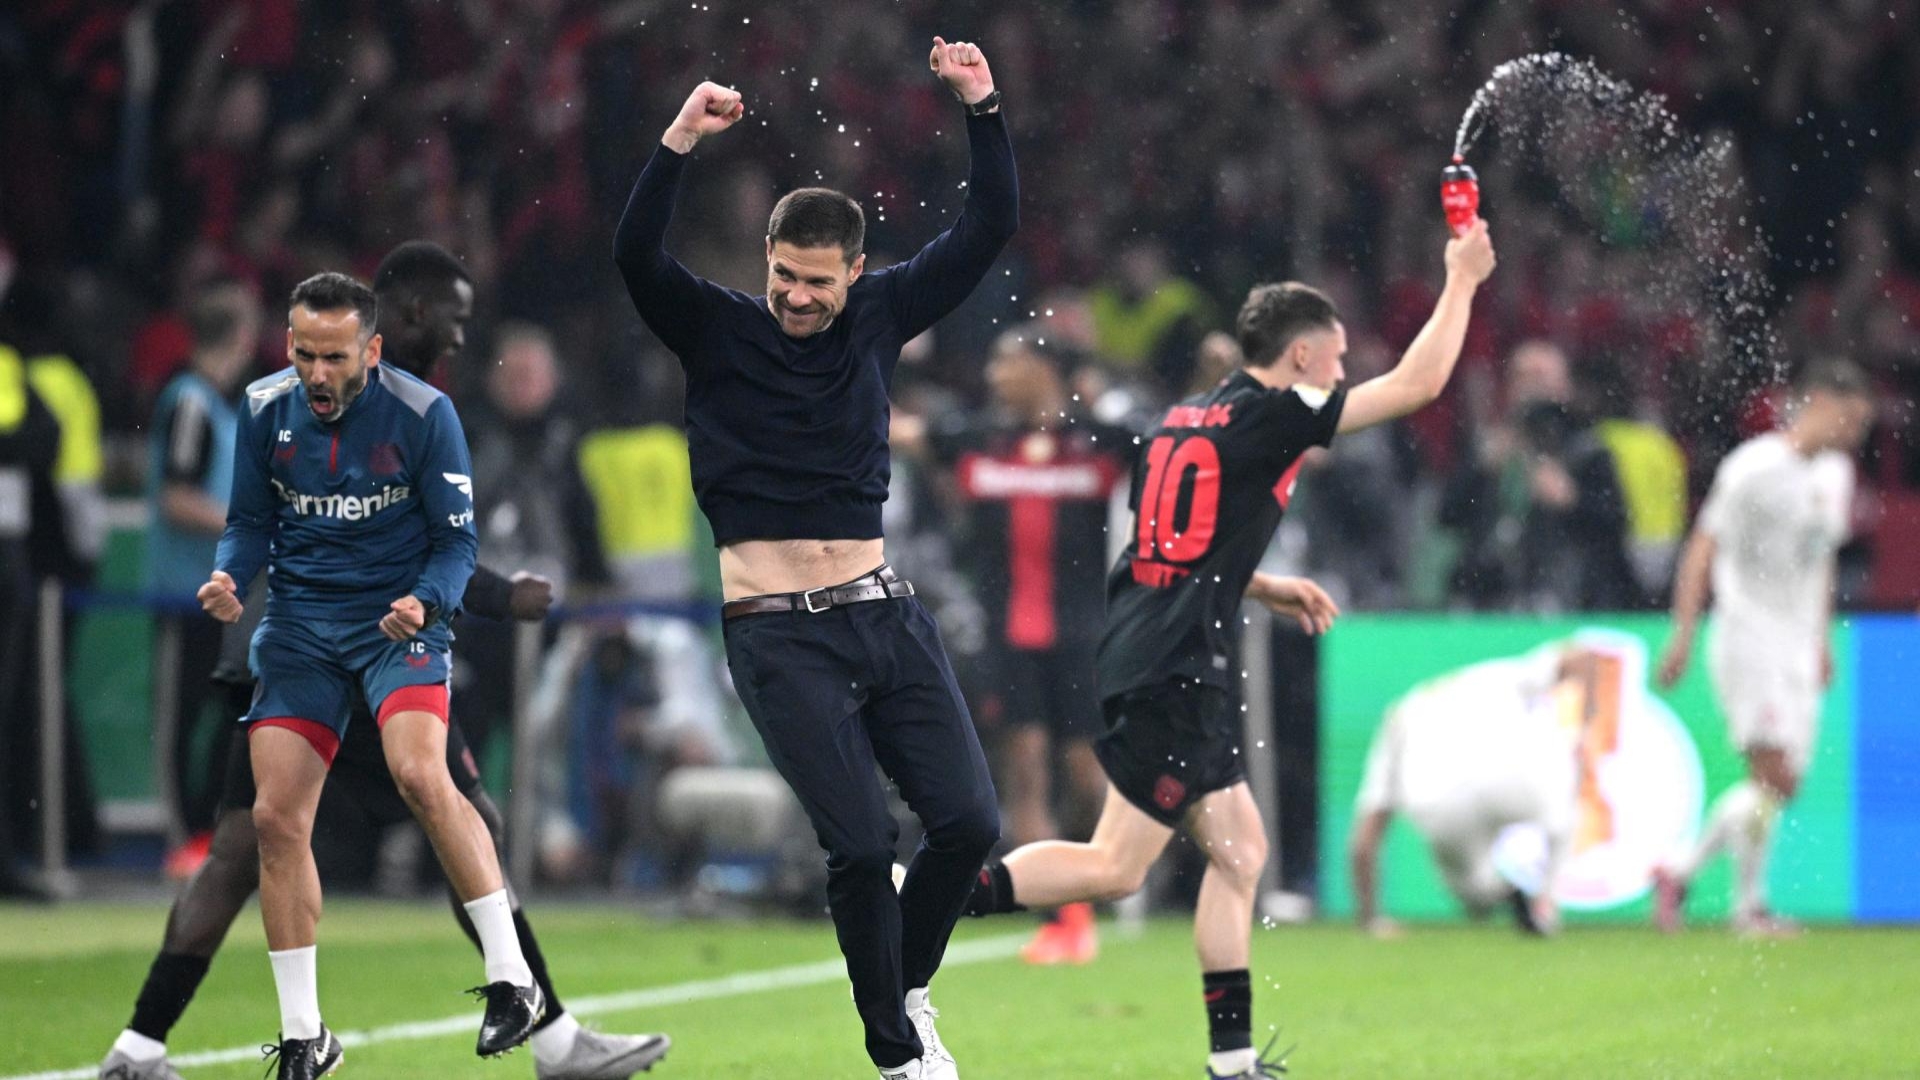 Bayer Leverkusen celebrate after winning DFB-Pokal